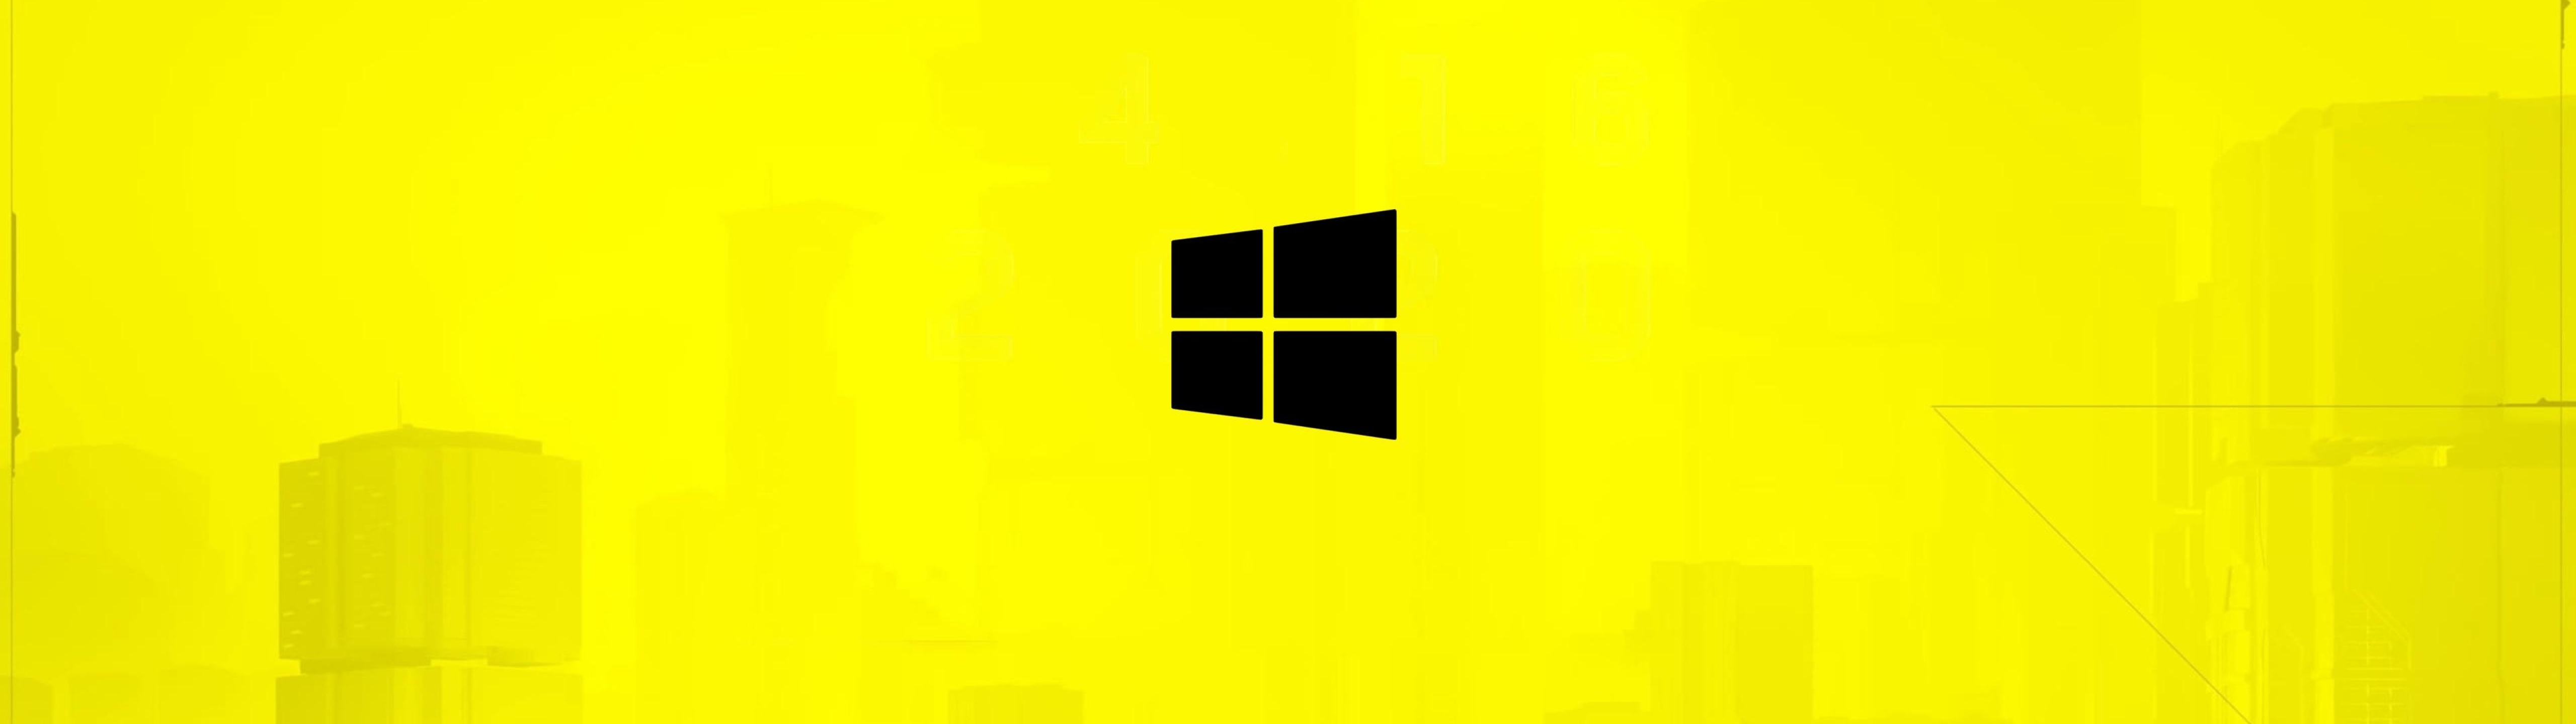 5120x1440 Windows 10 X Cyberpunk 2077 5120x1440 Resolution Wallpaper